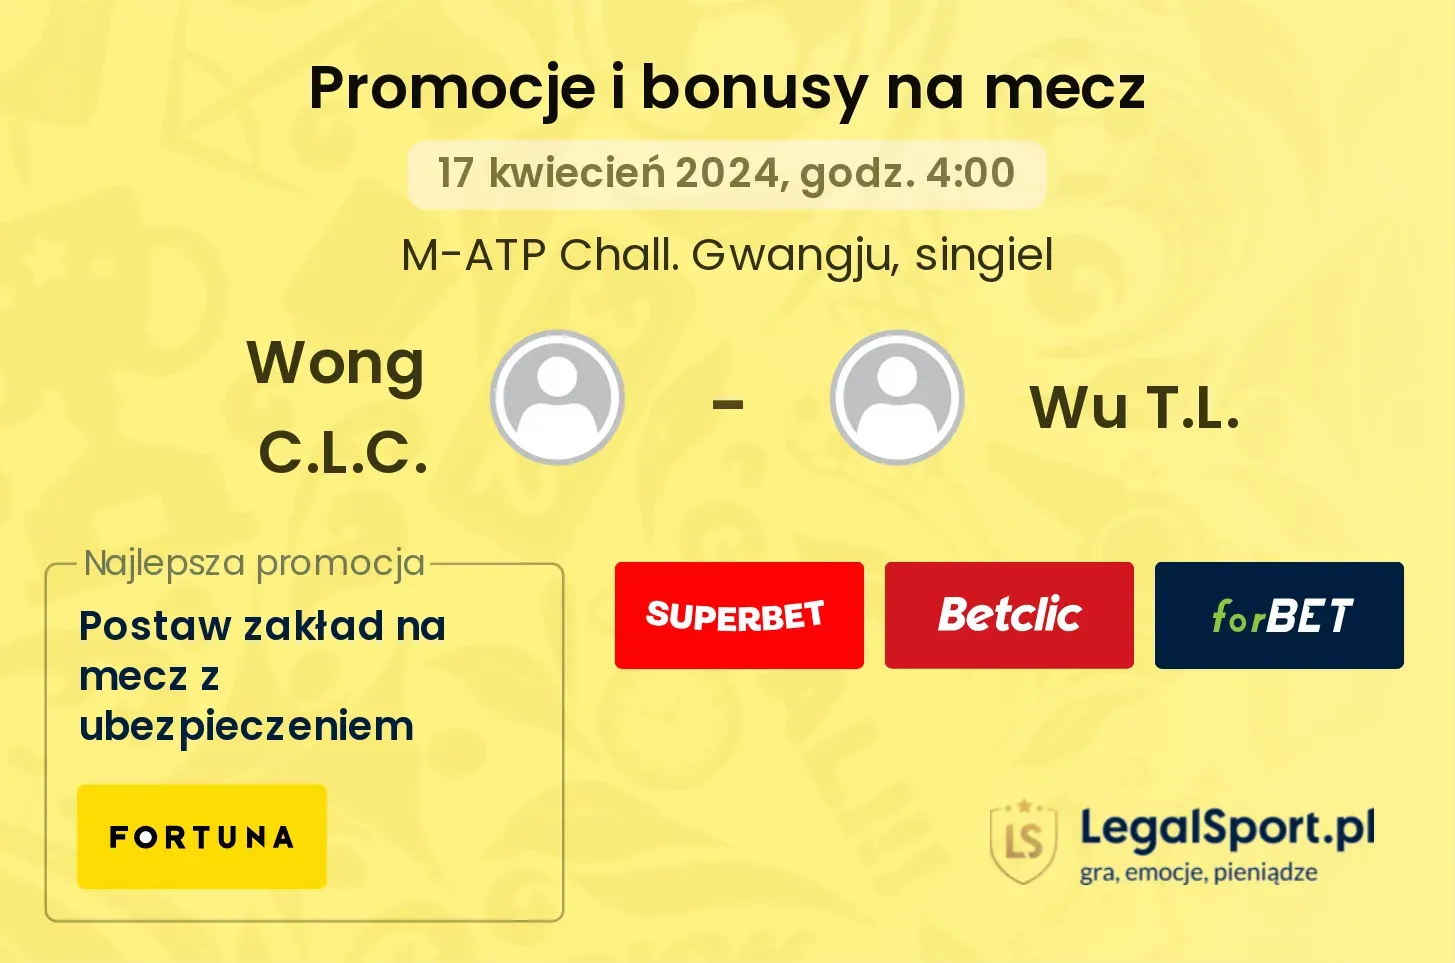 Wong C.L.C. - Wu T.L. promocje bonusy na mecz